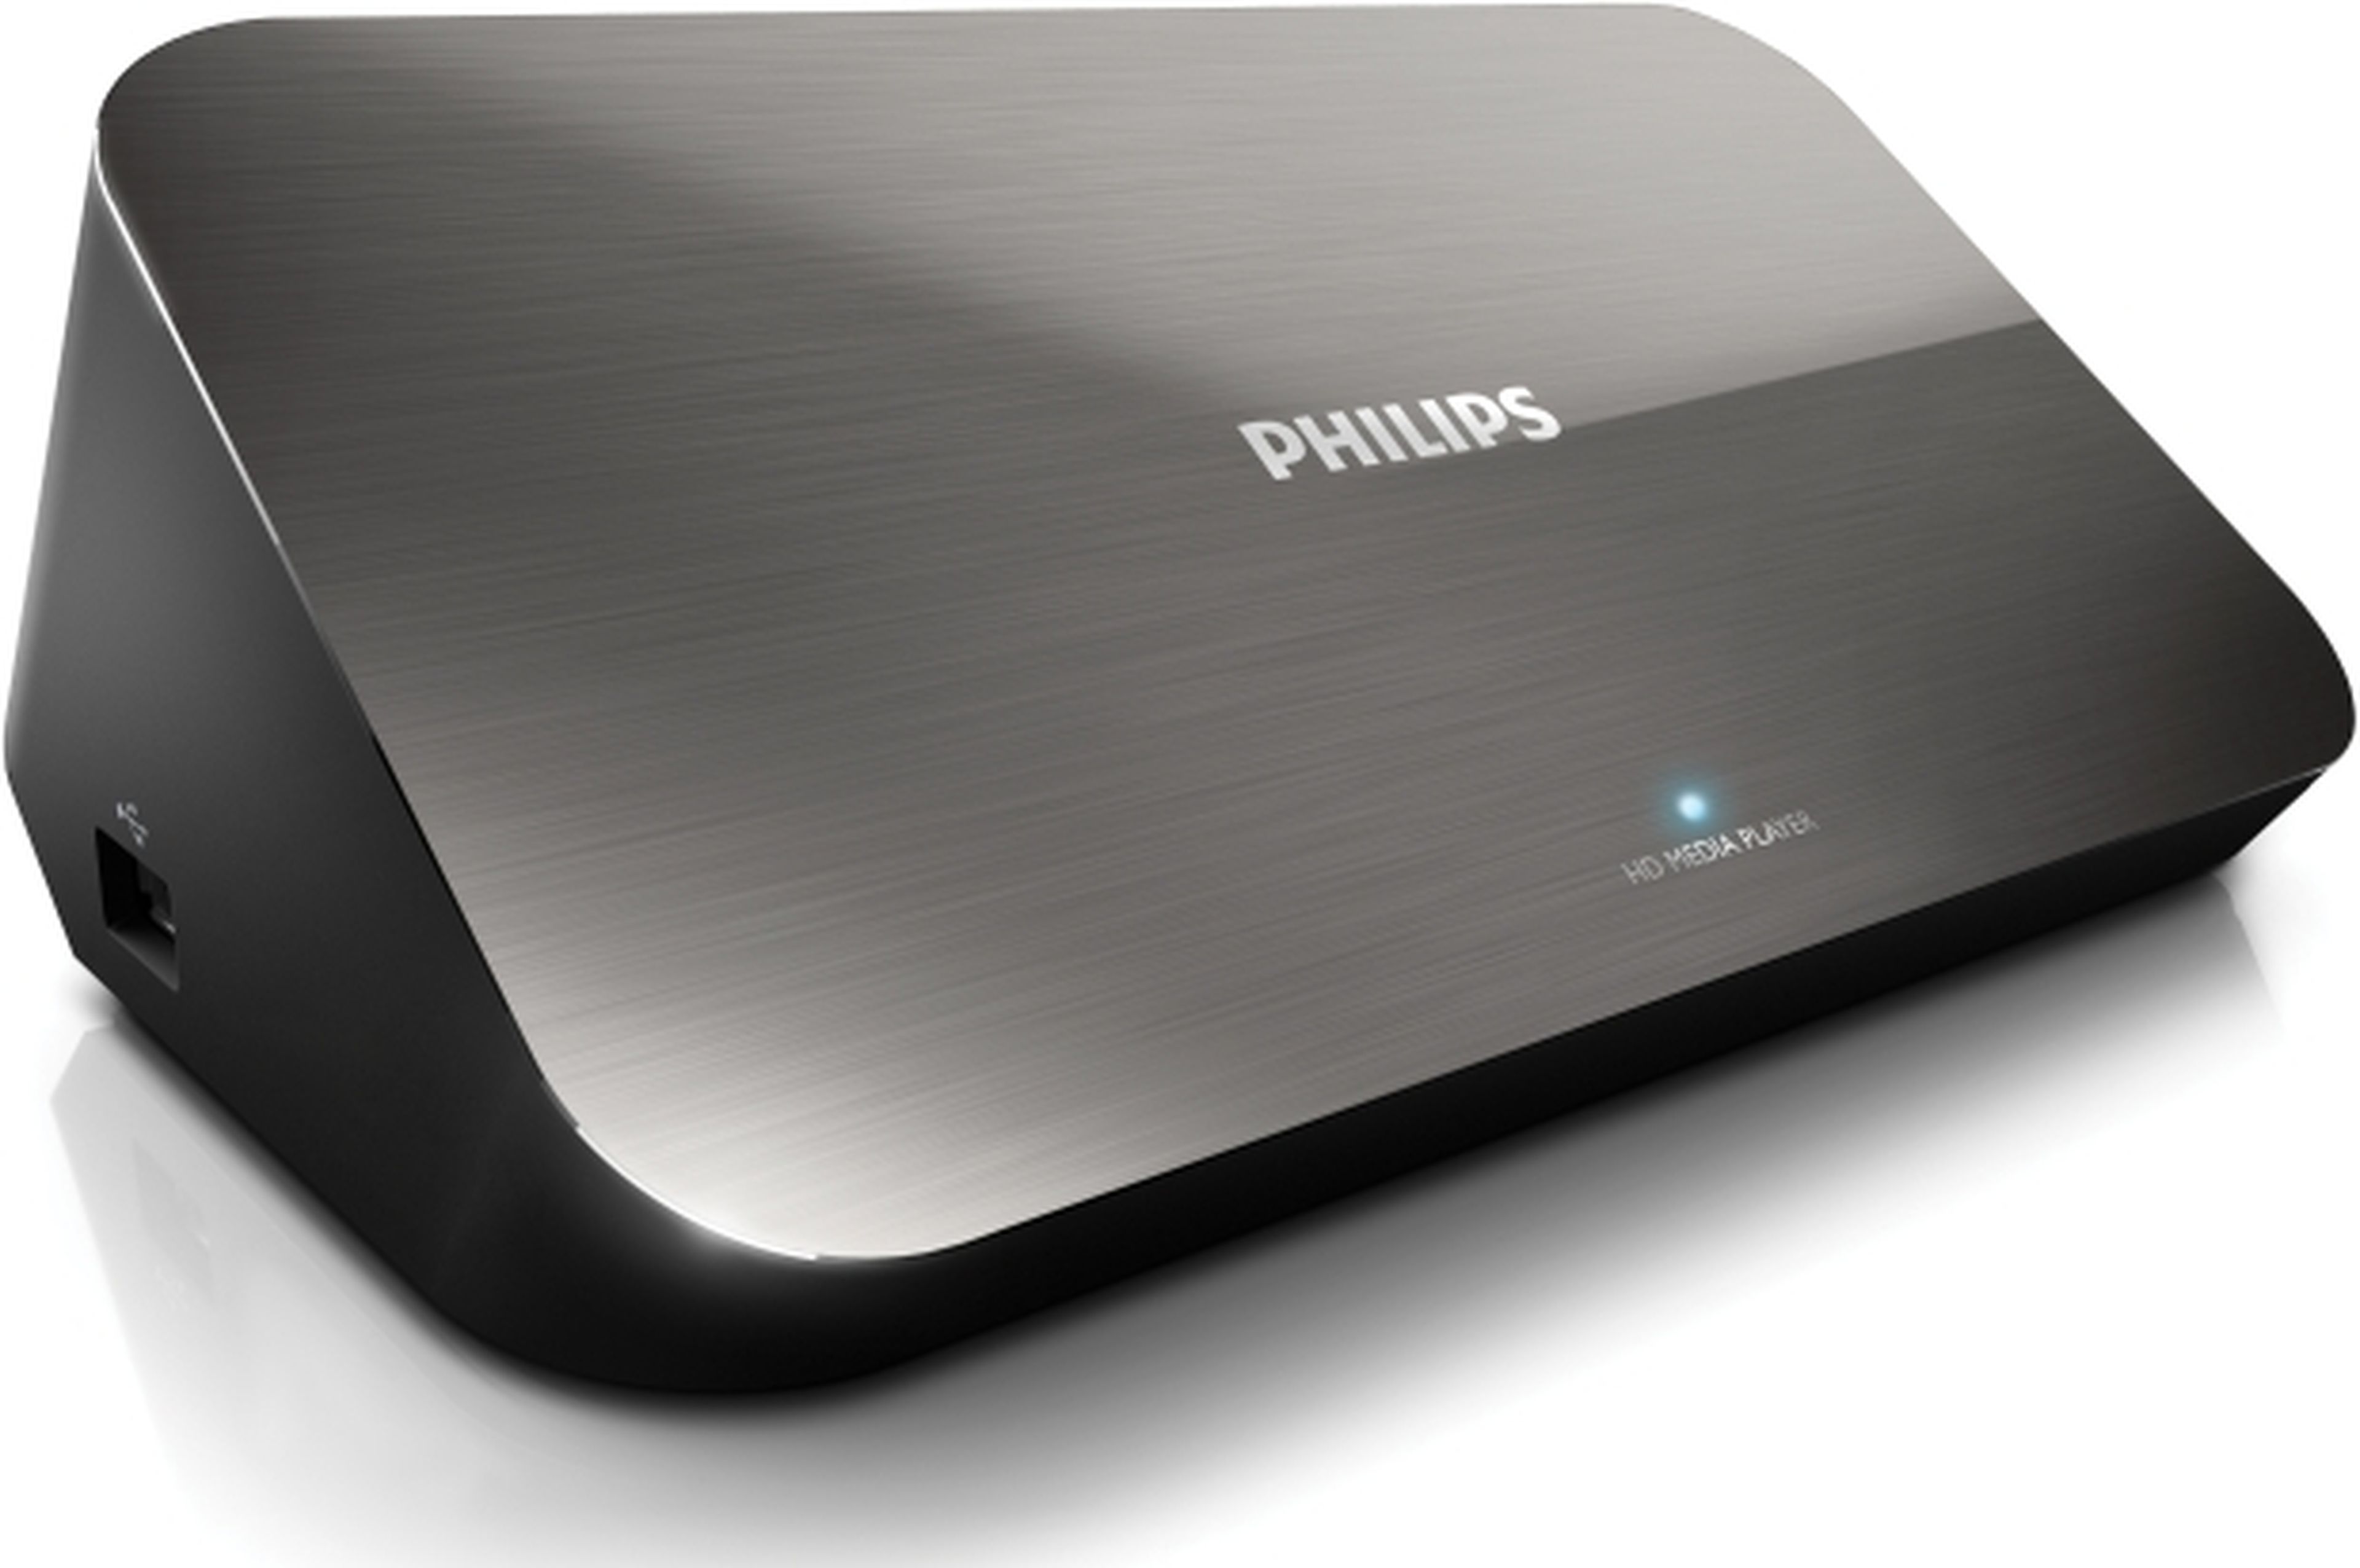 Philips Media Player